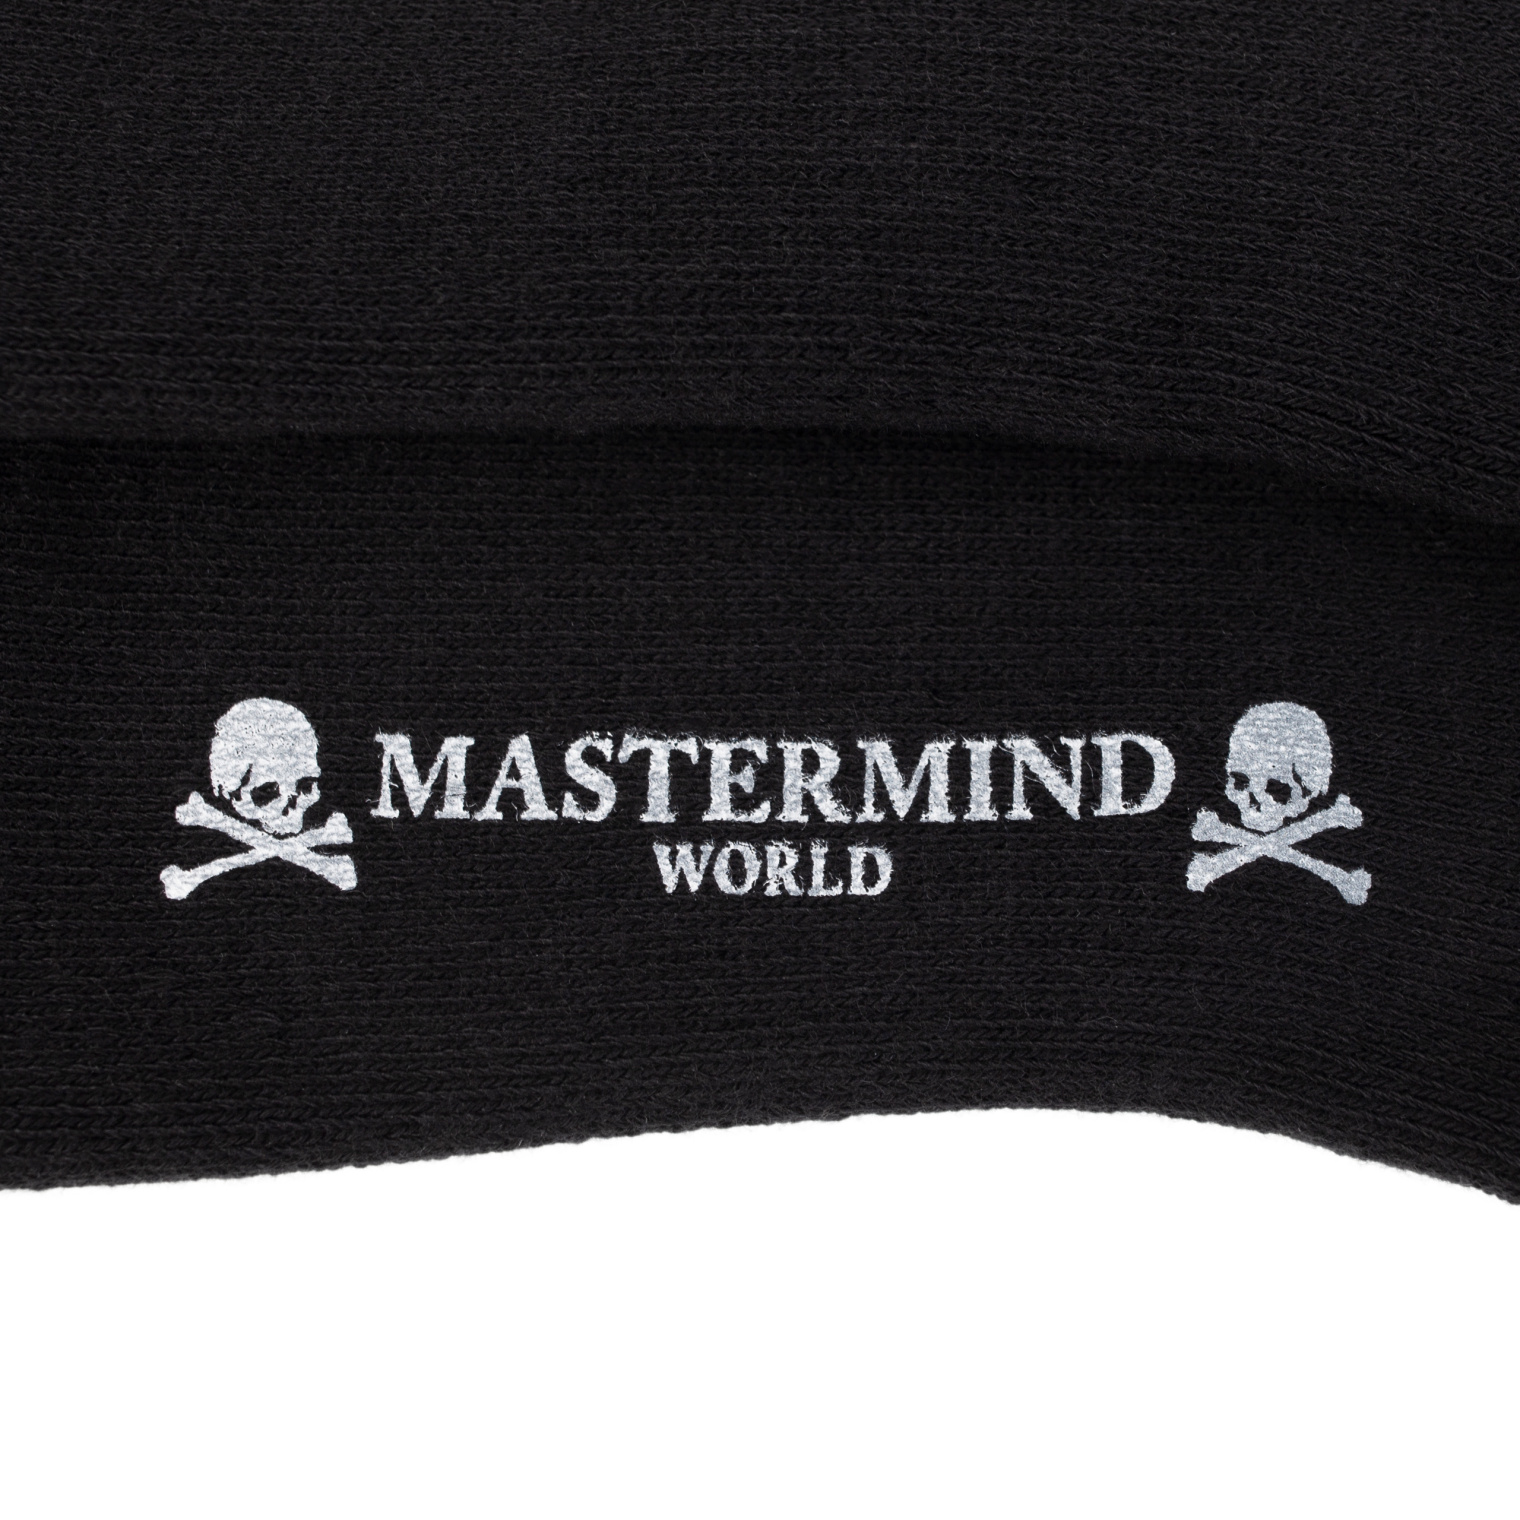 Mastermind WORLD Black skull socks